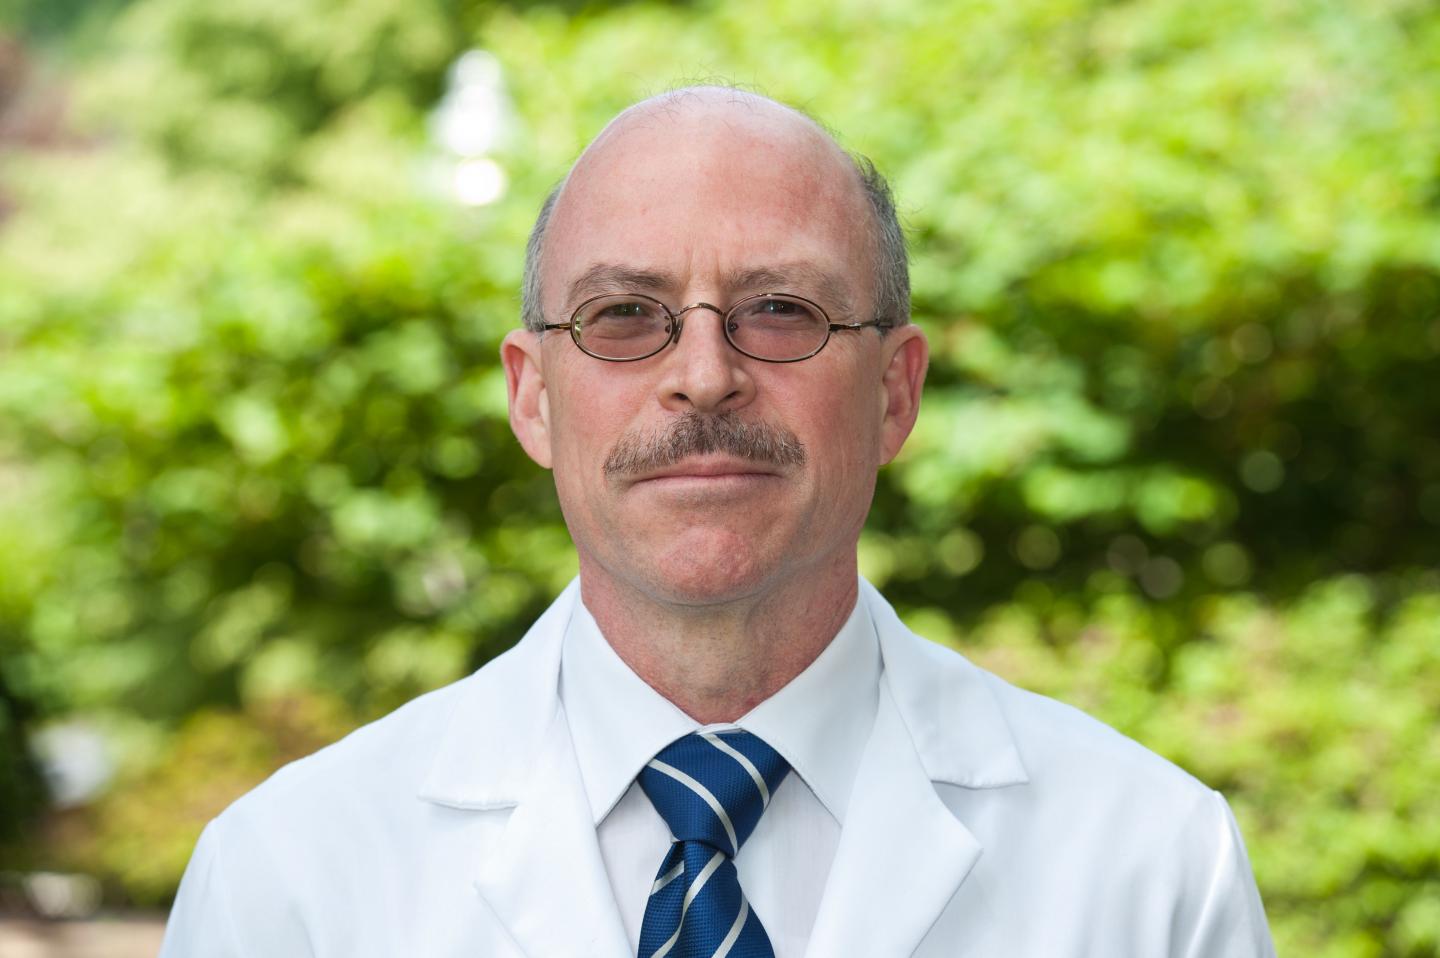 R. Scott Turner, M.D., Ph.D., Georgetown University Medical Center